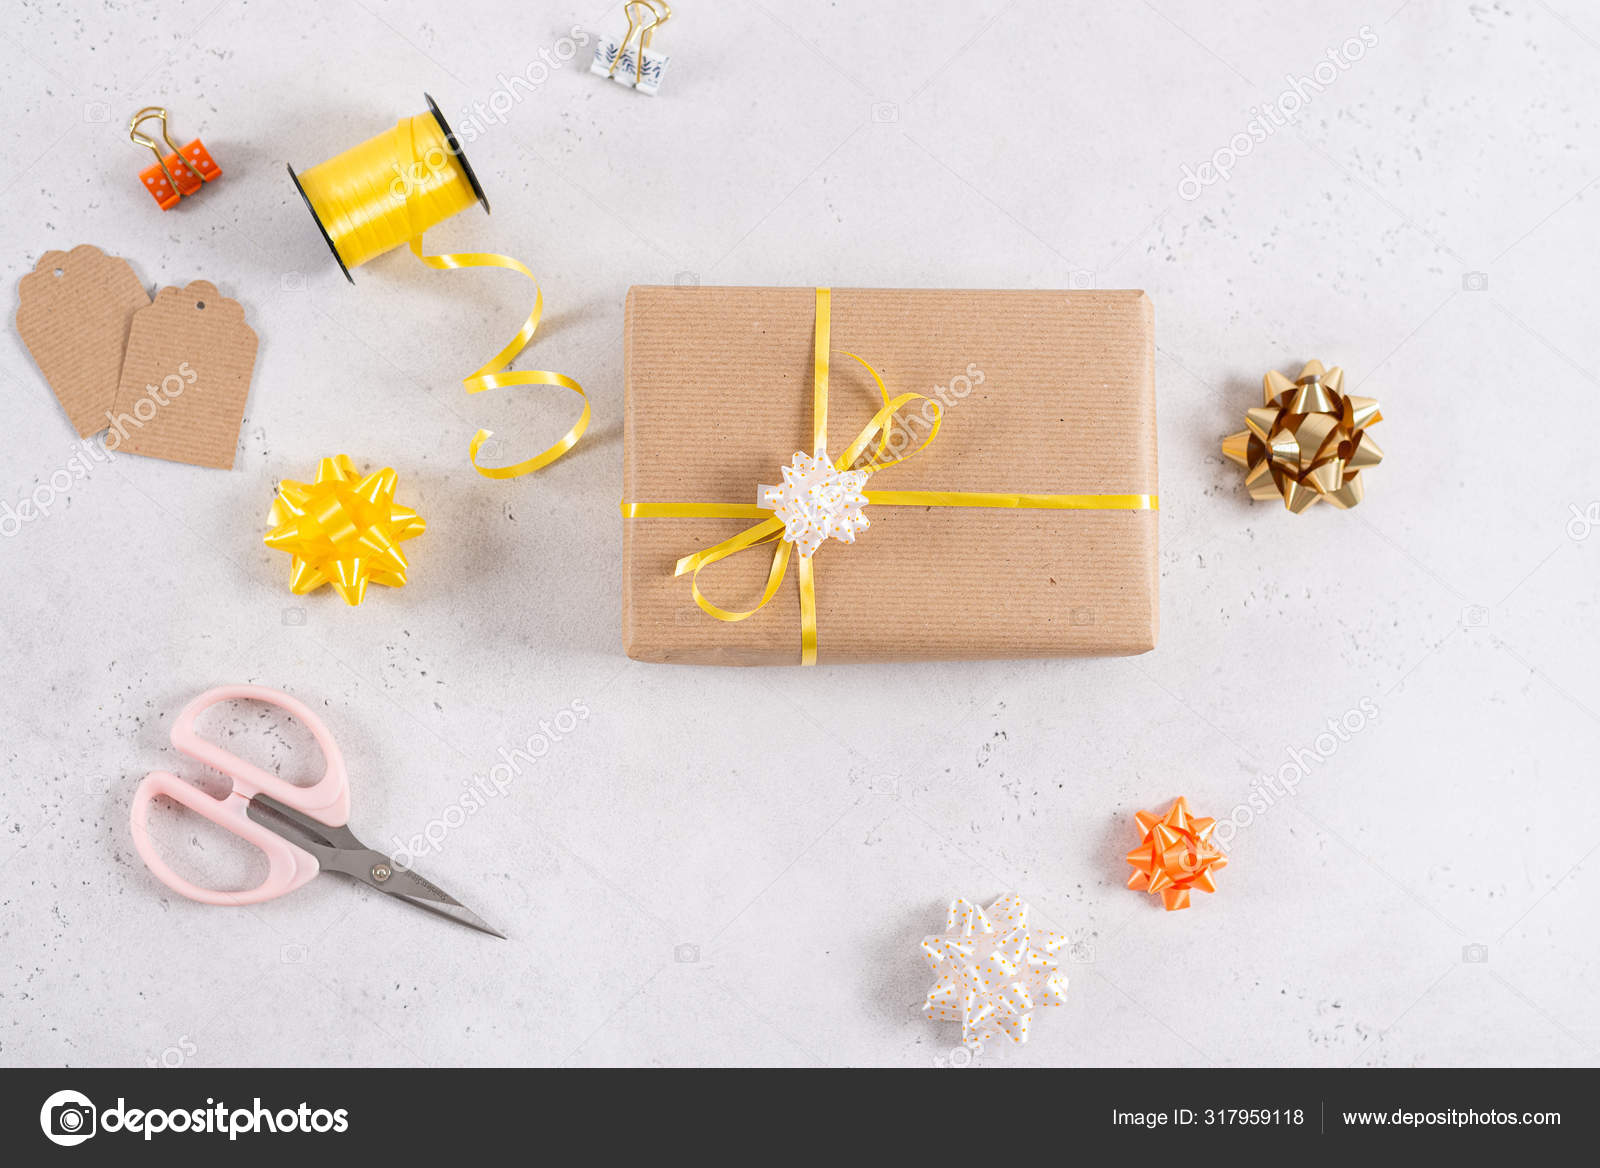 https://st3.depositphotos.com/18844808/31795/i/1600/depositphotos_317959118-stock-photo-gift-box-wrapped-in-craft.jpg